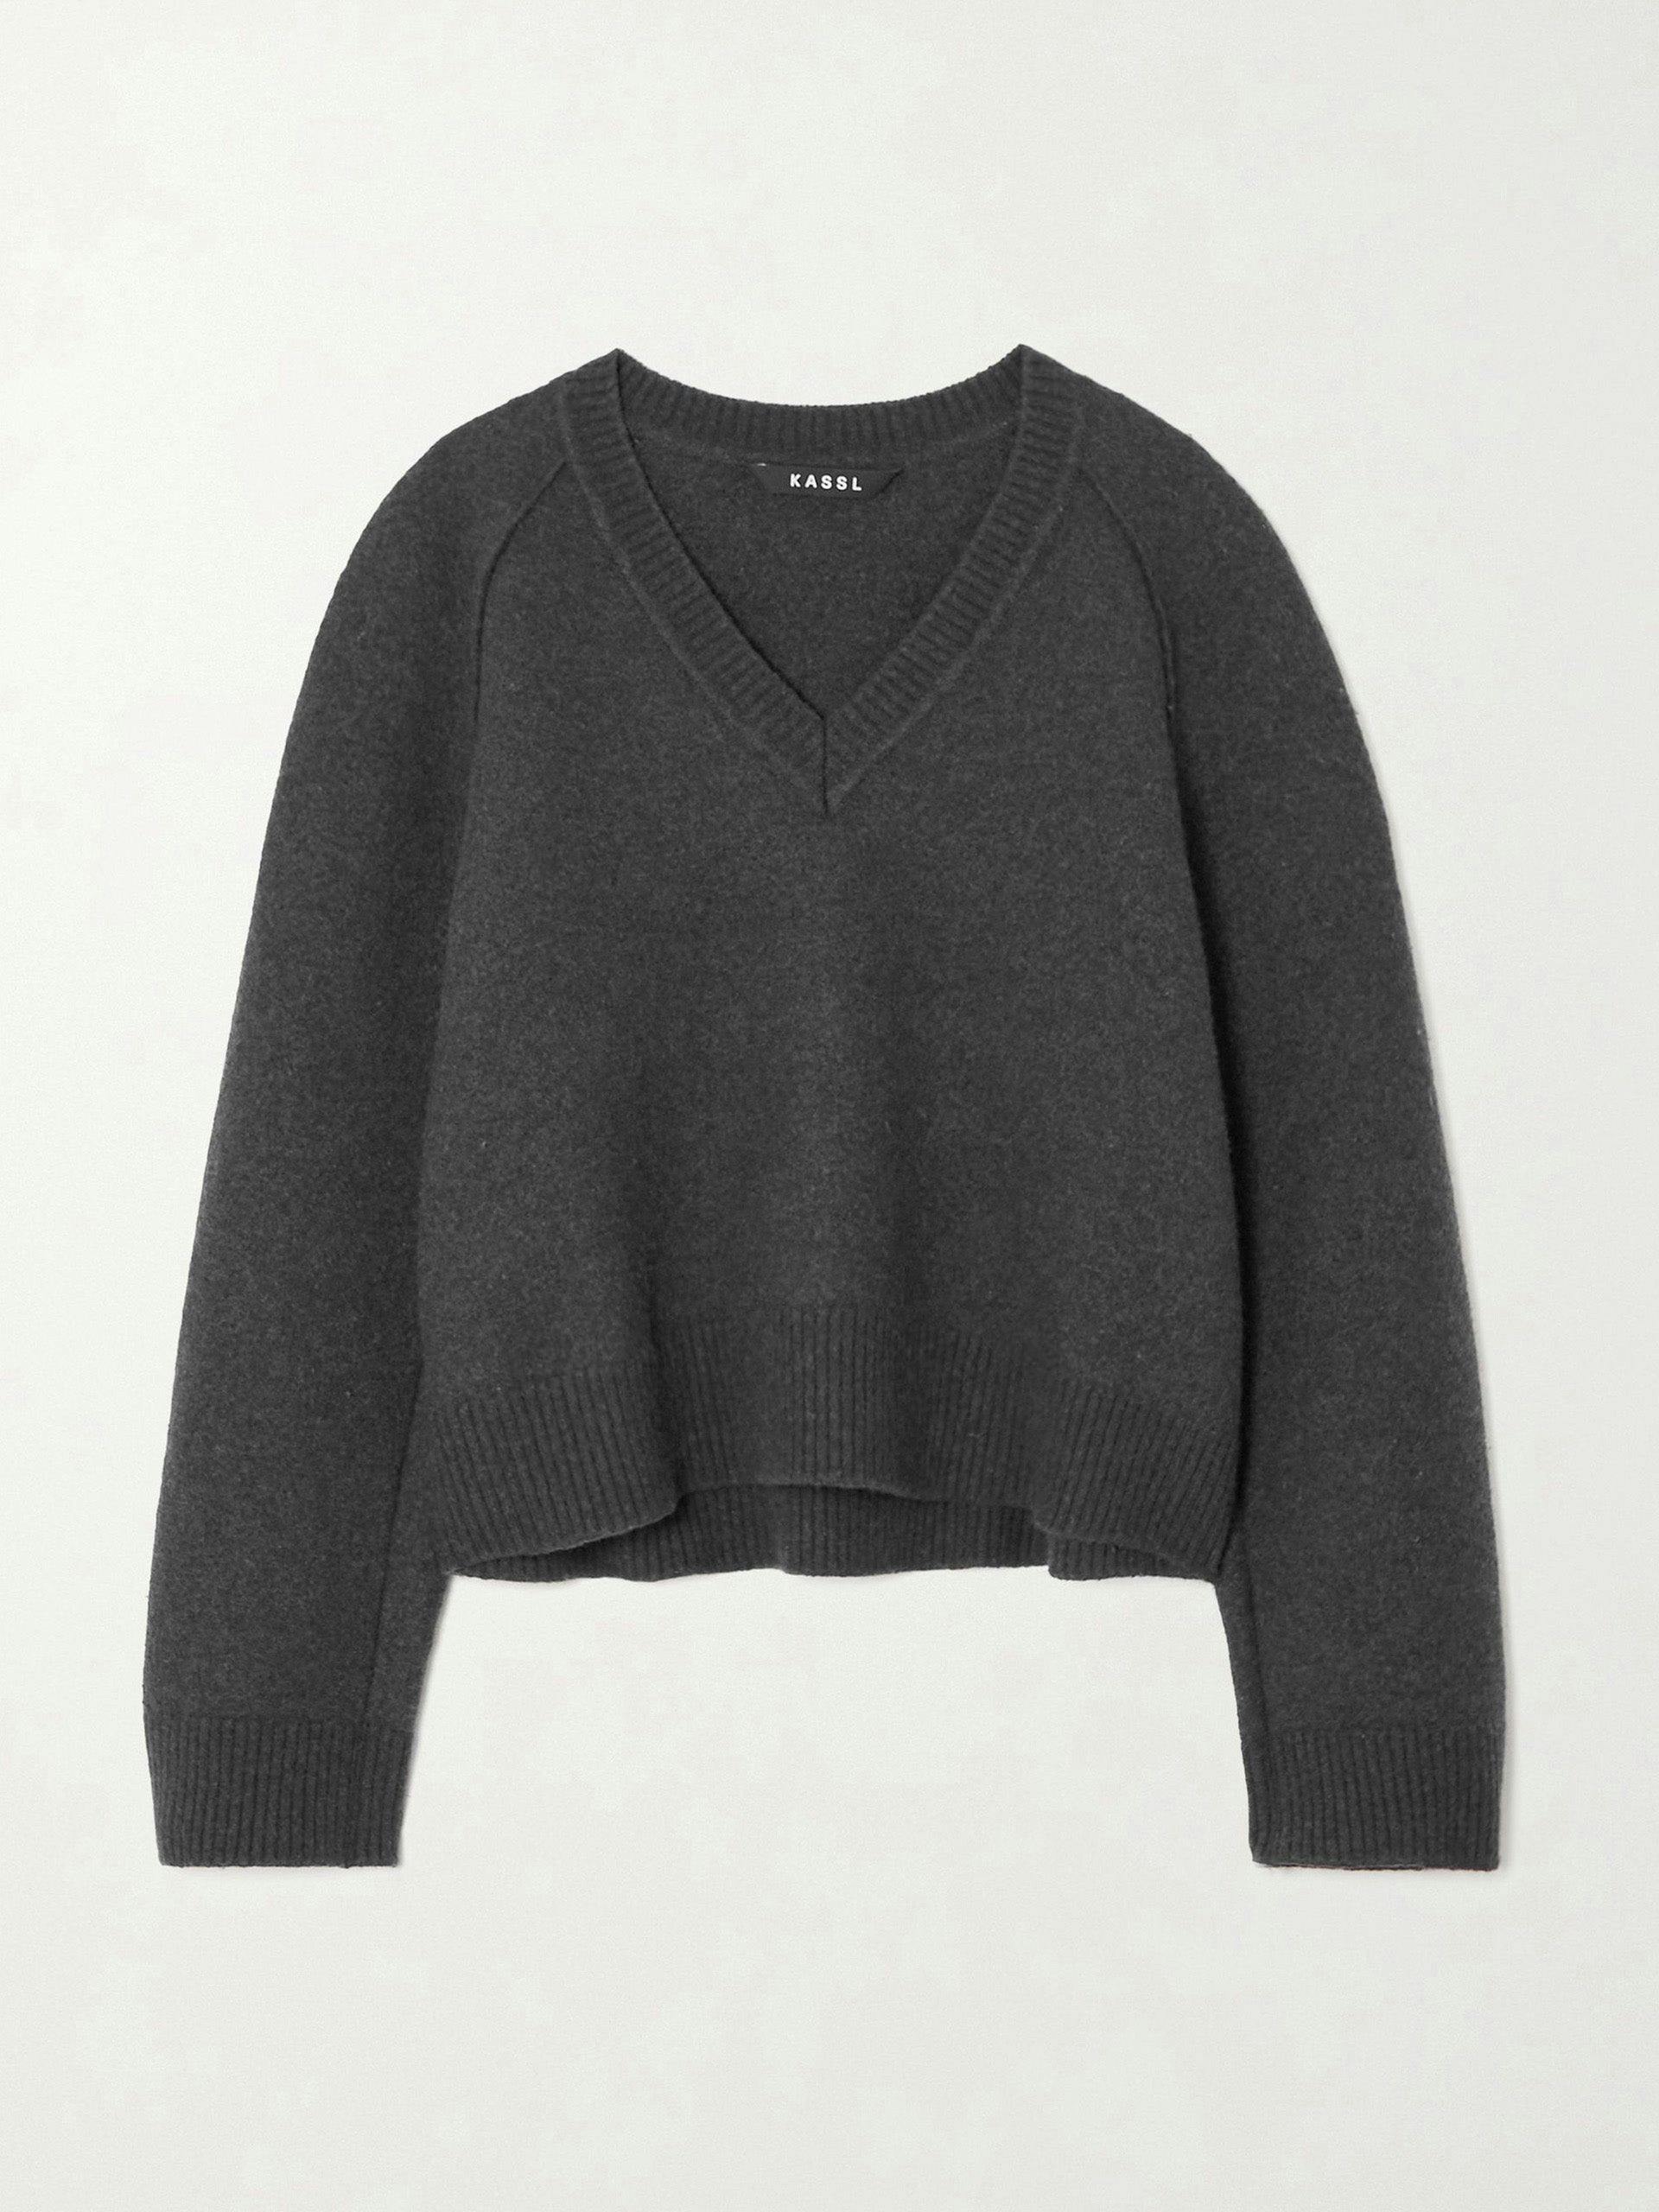 Dark grey oversized knitted V-neck sweater